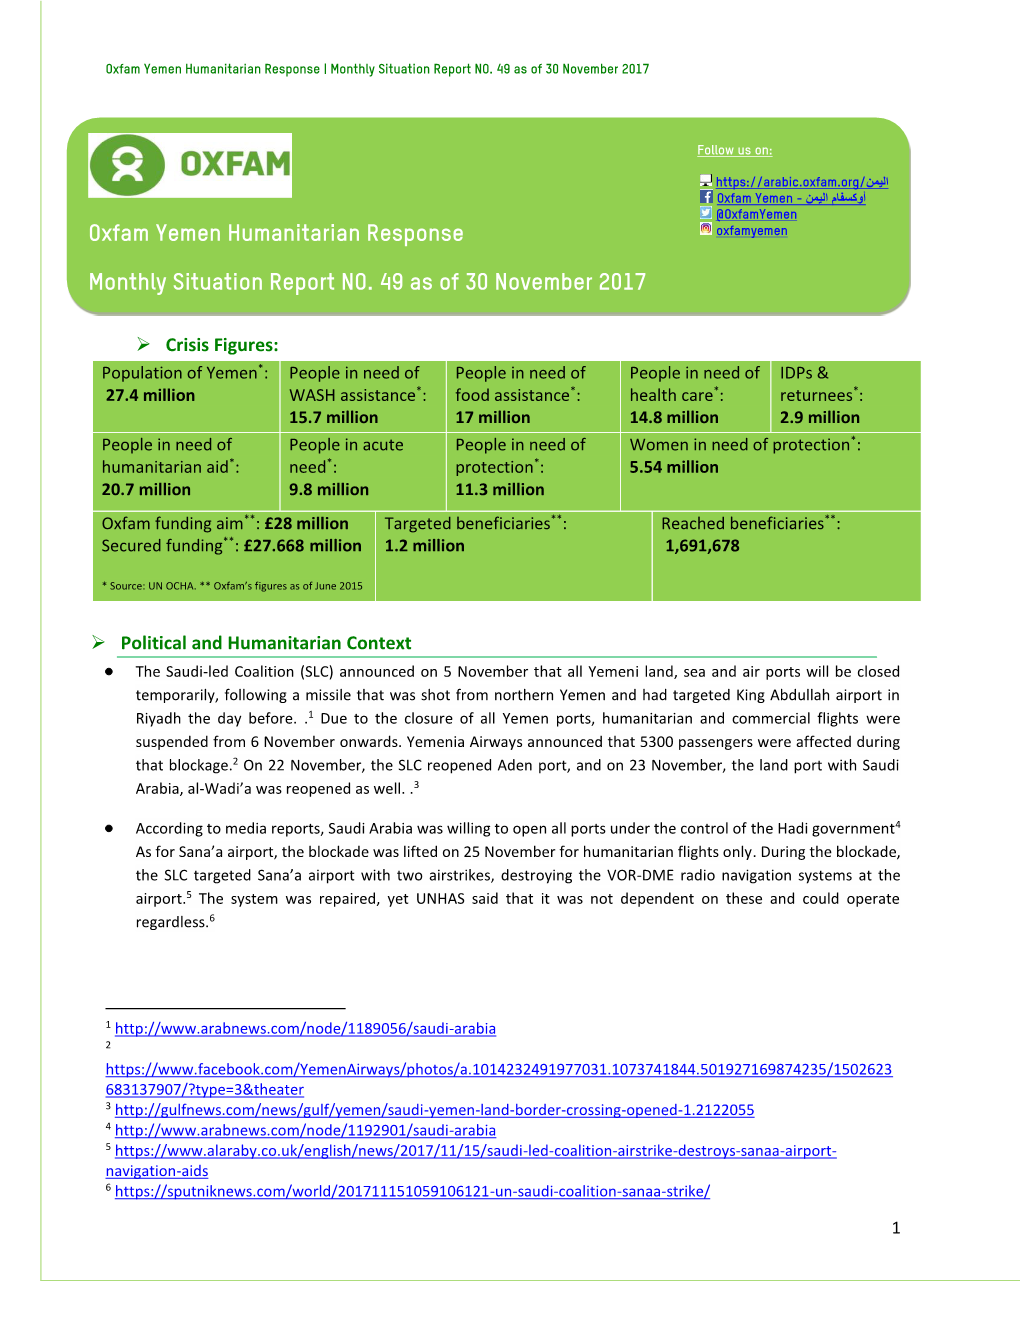 Oxfam Yemen Humanitarian Response Monthly Situation Report